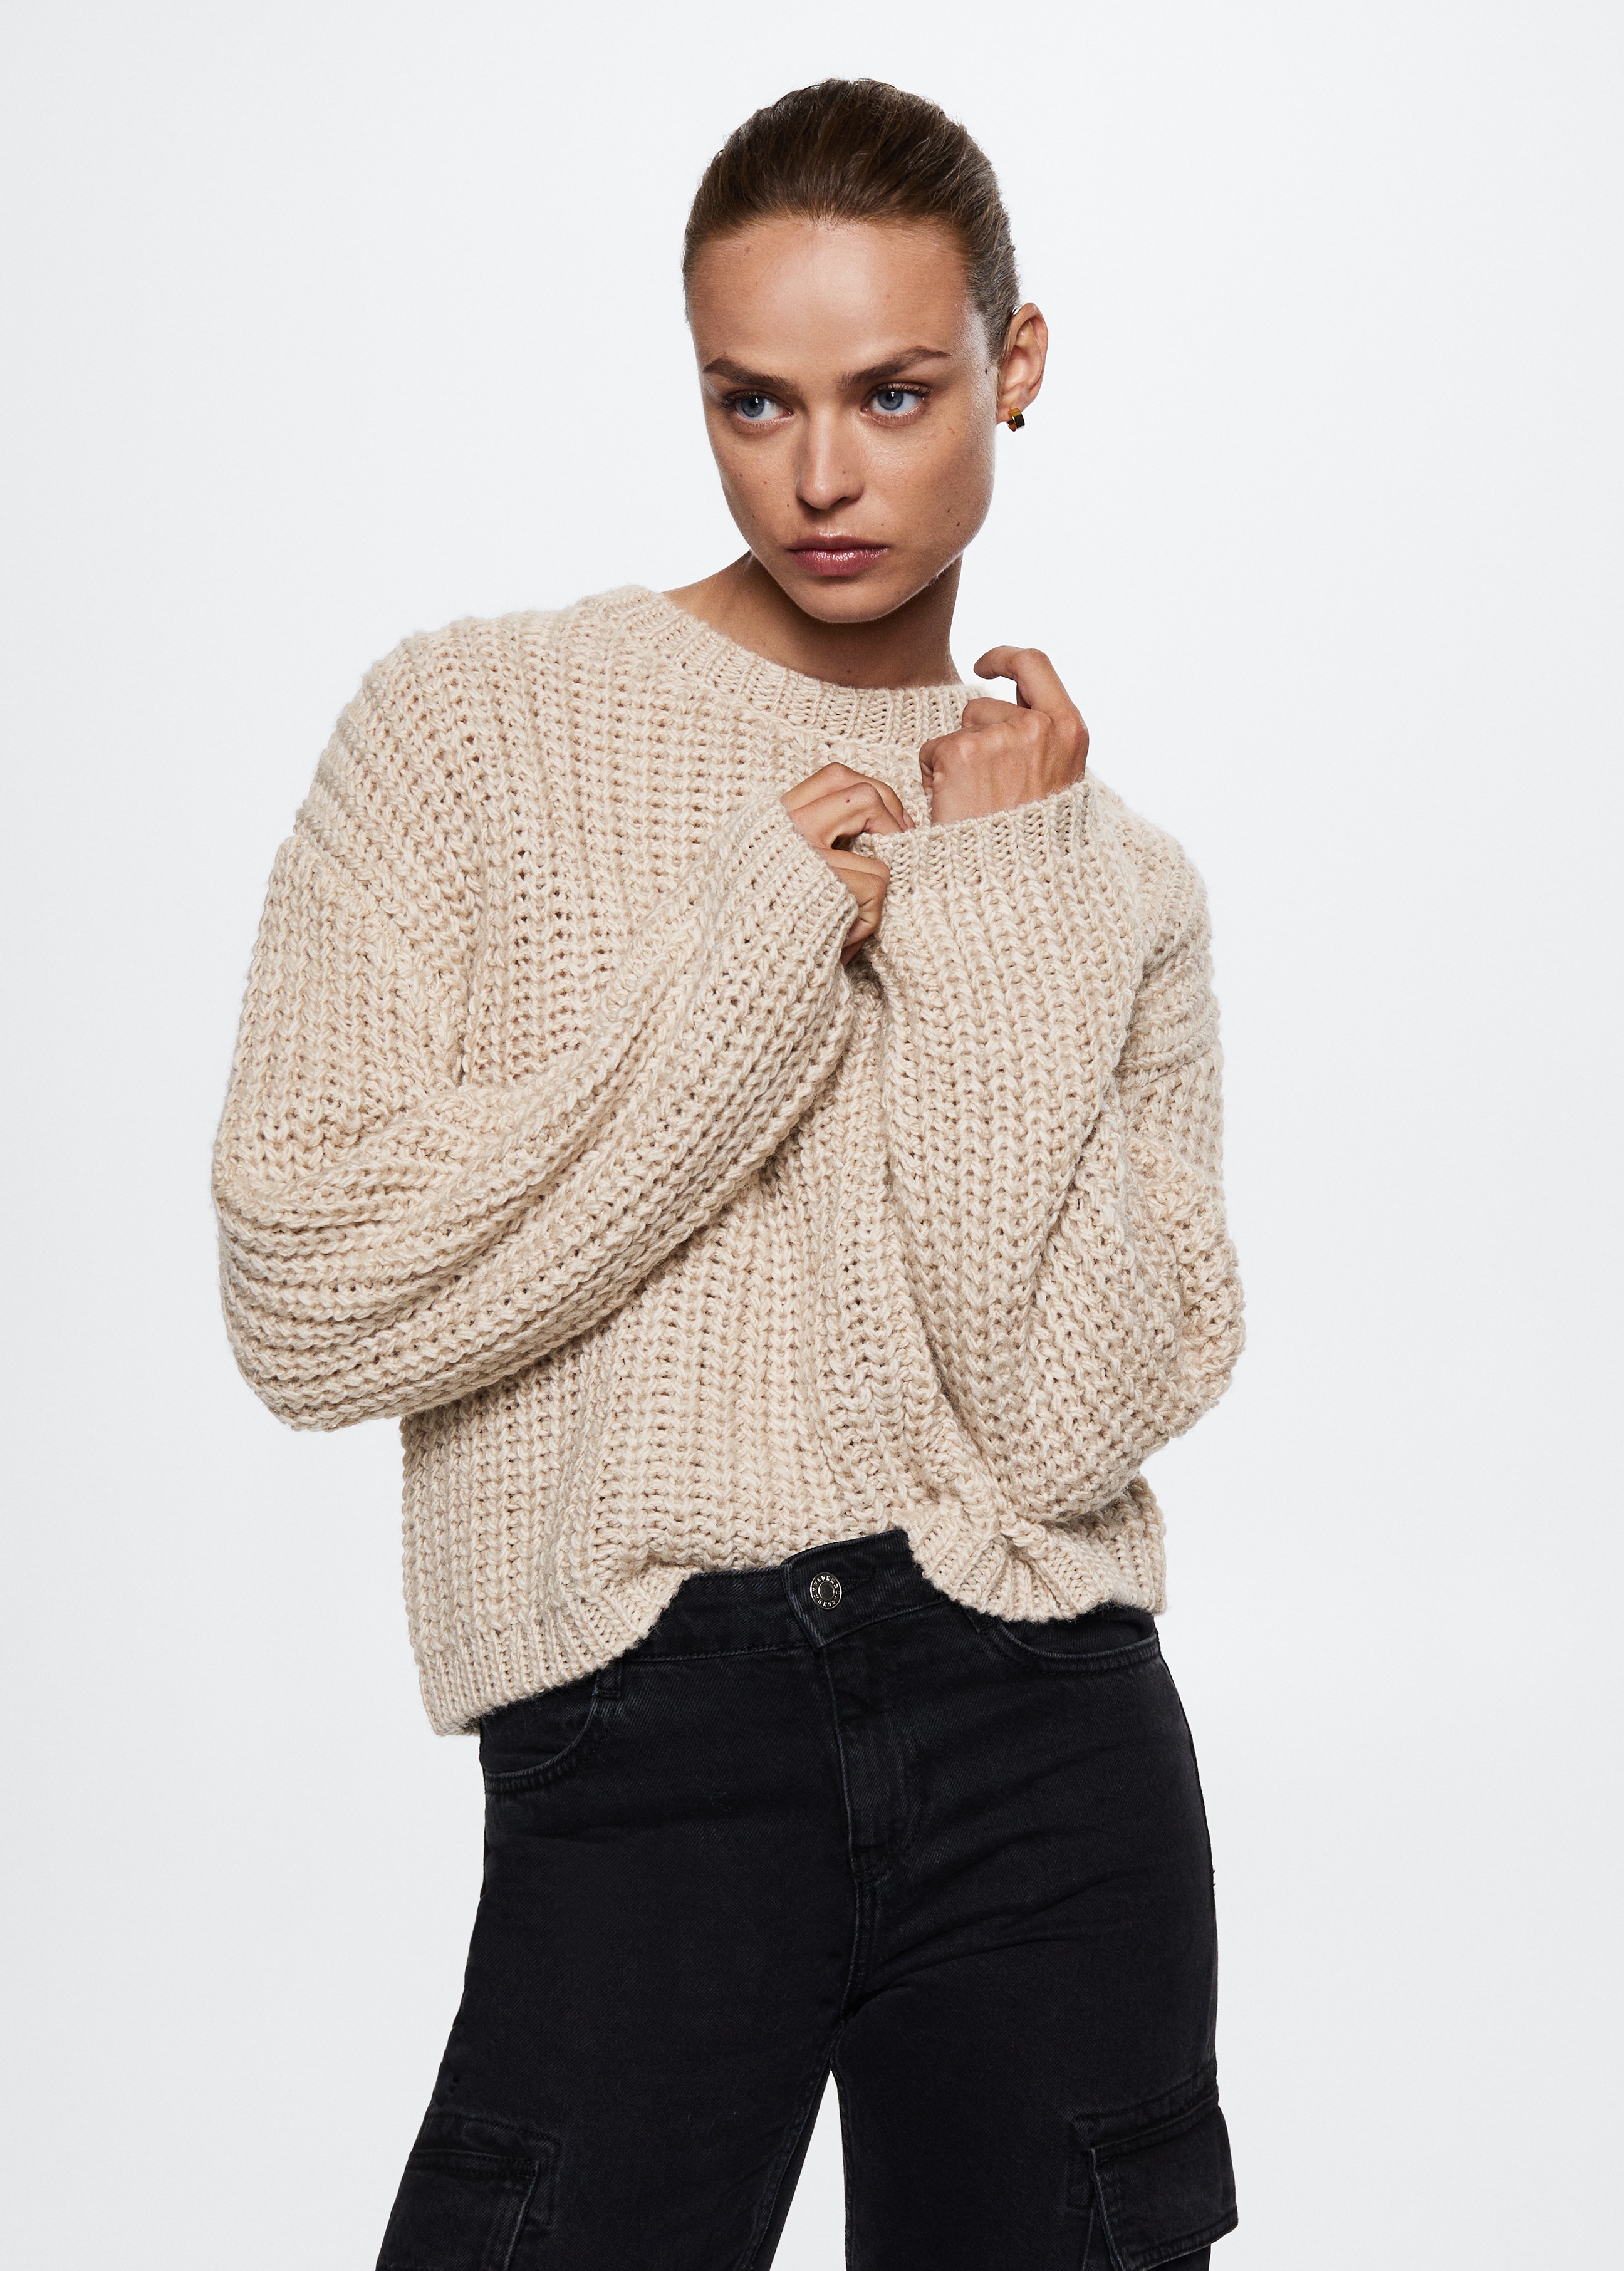 Chunky-knit sweater - Medium plane